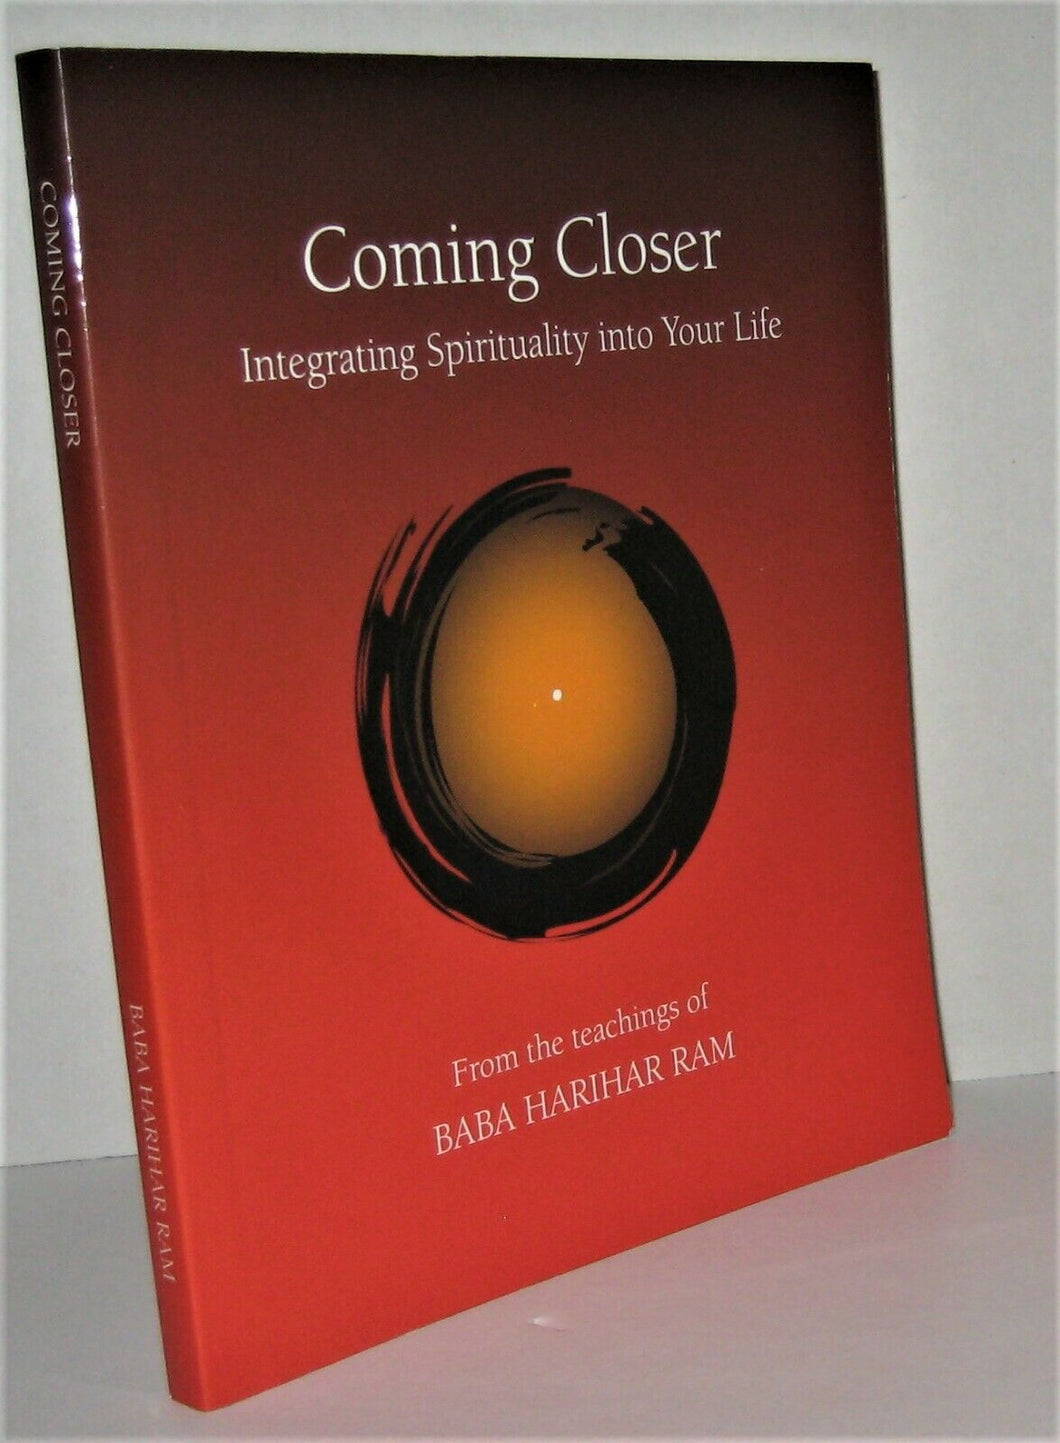 Coming Closer, Integrating Spirituality into Your Live